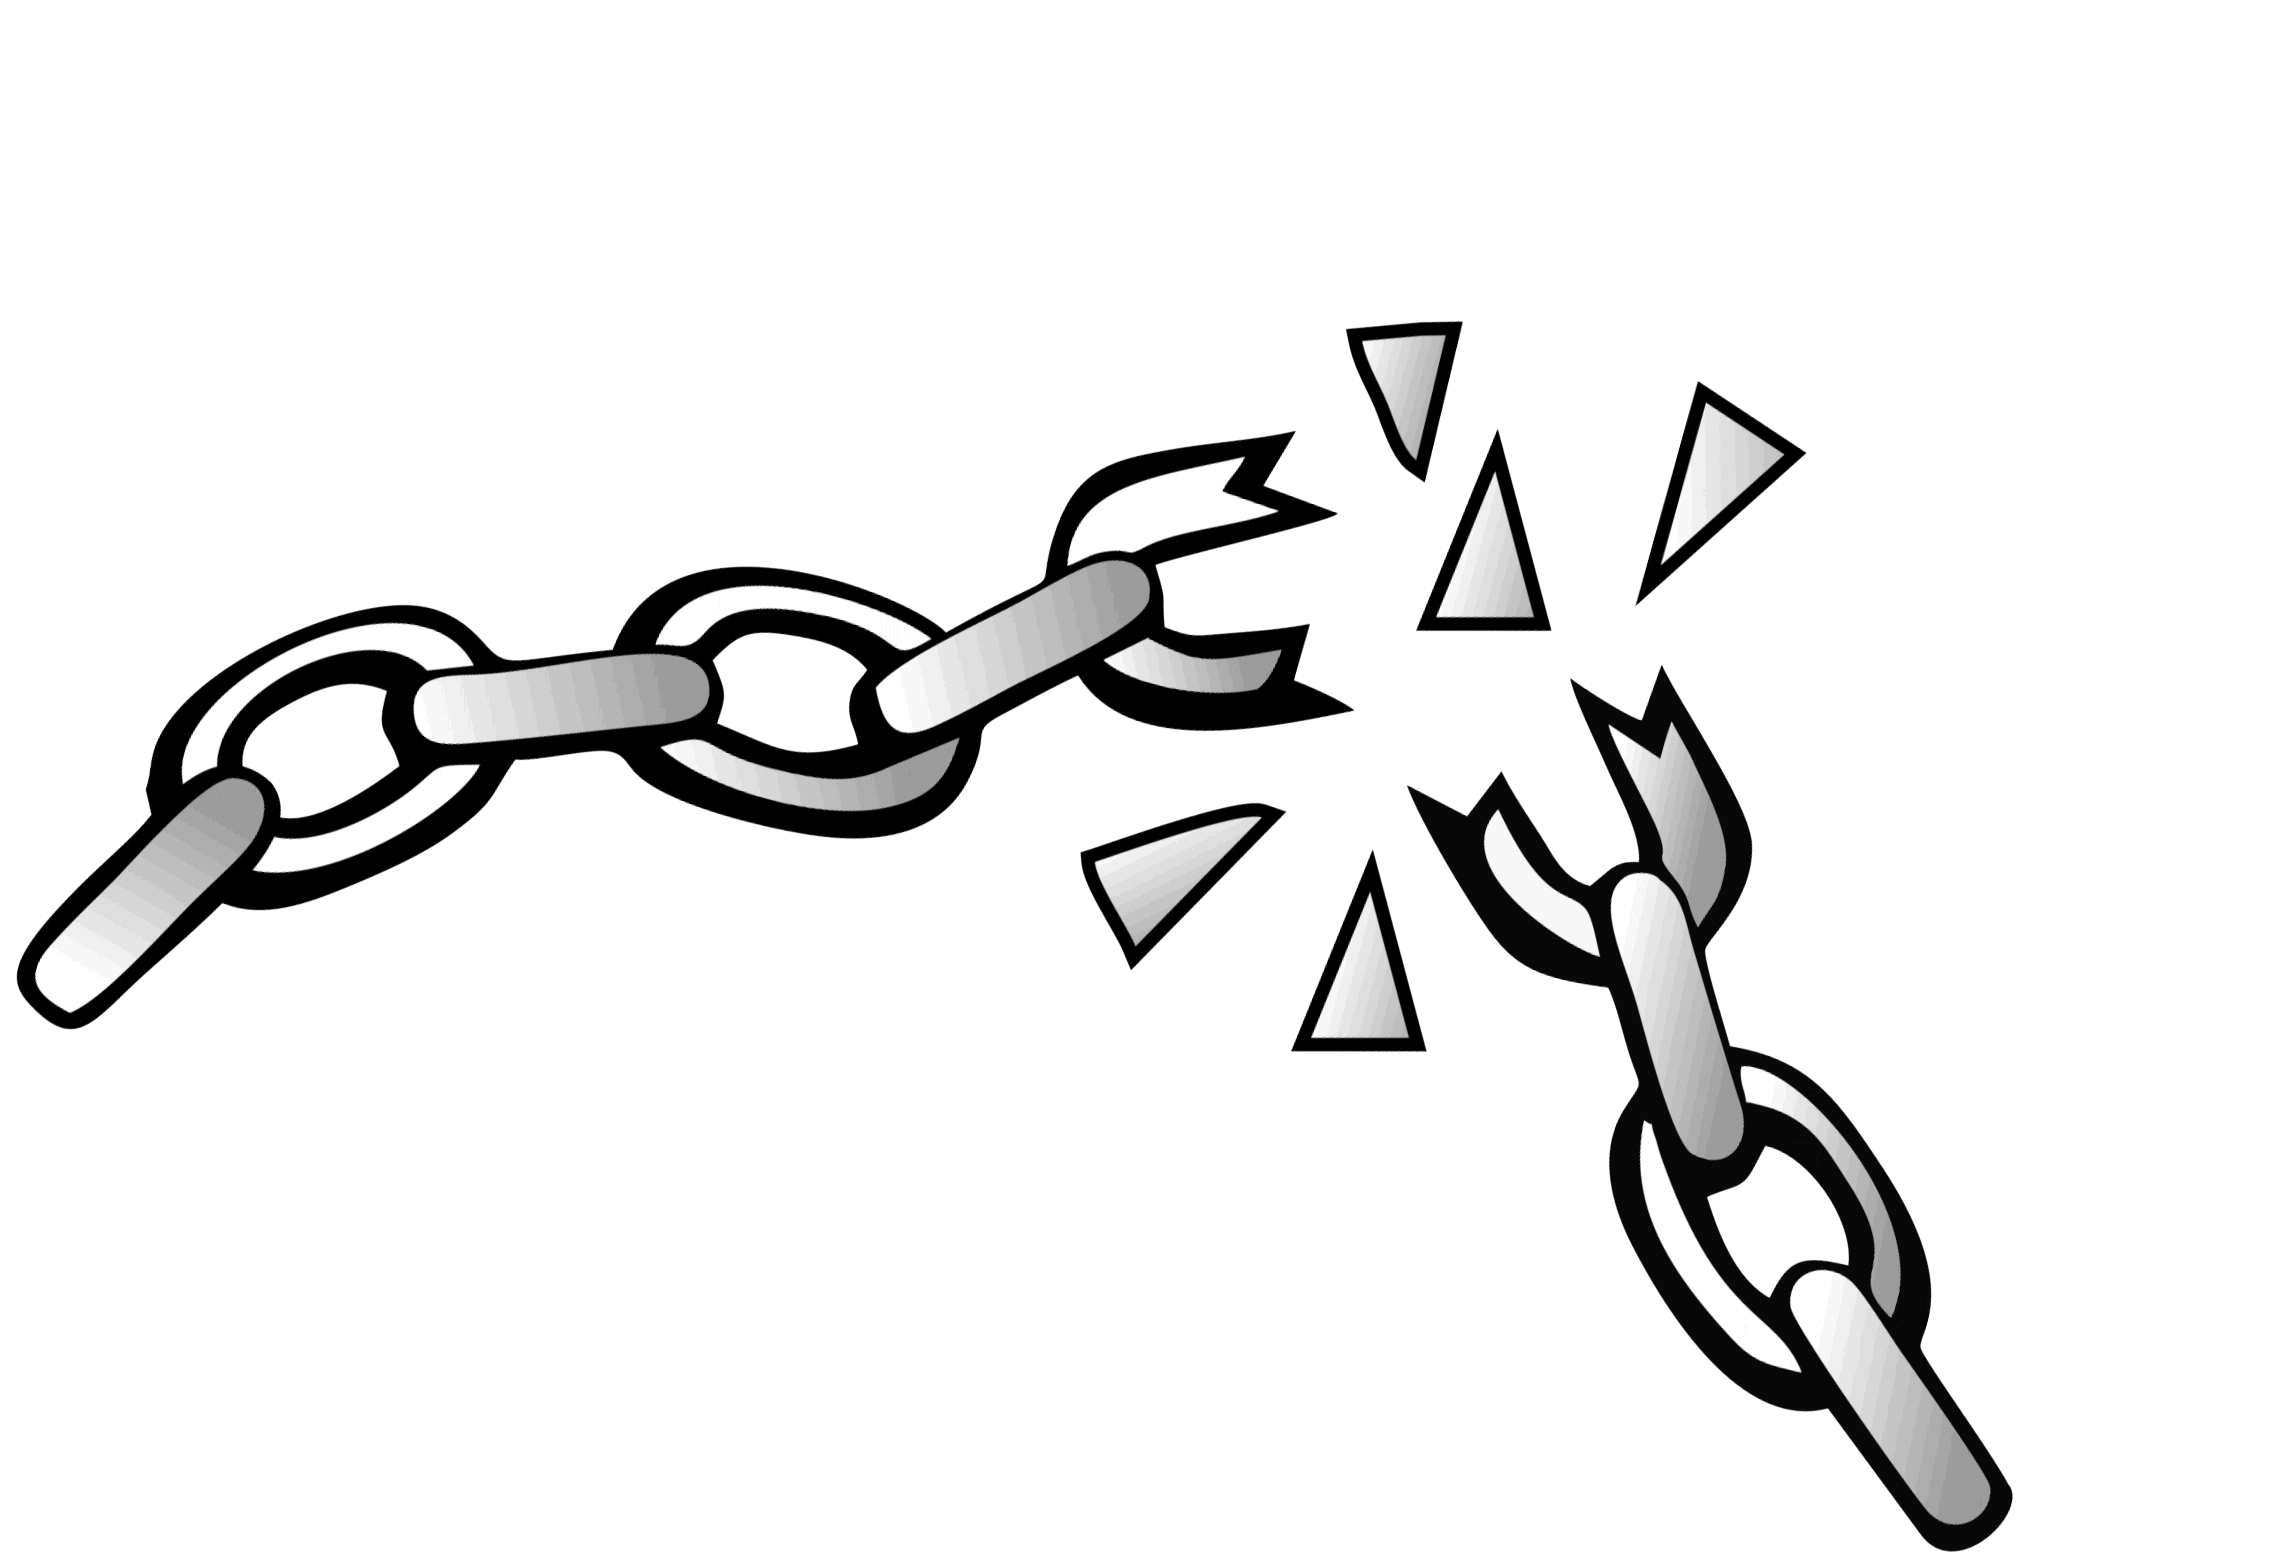 A broken chain